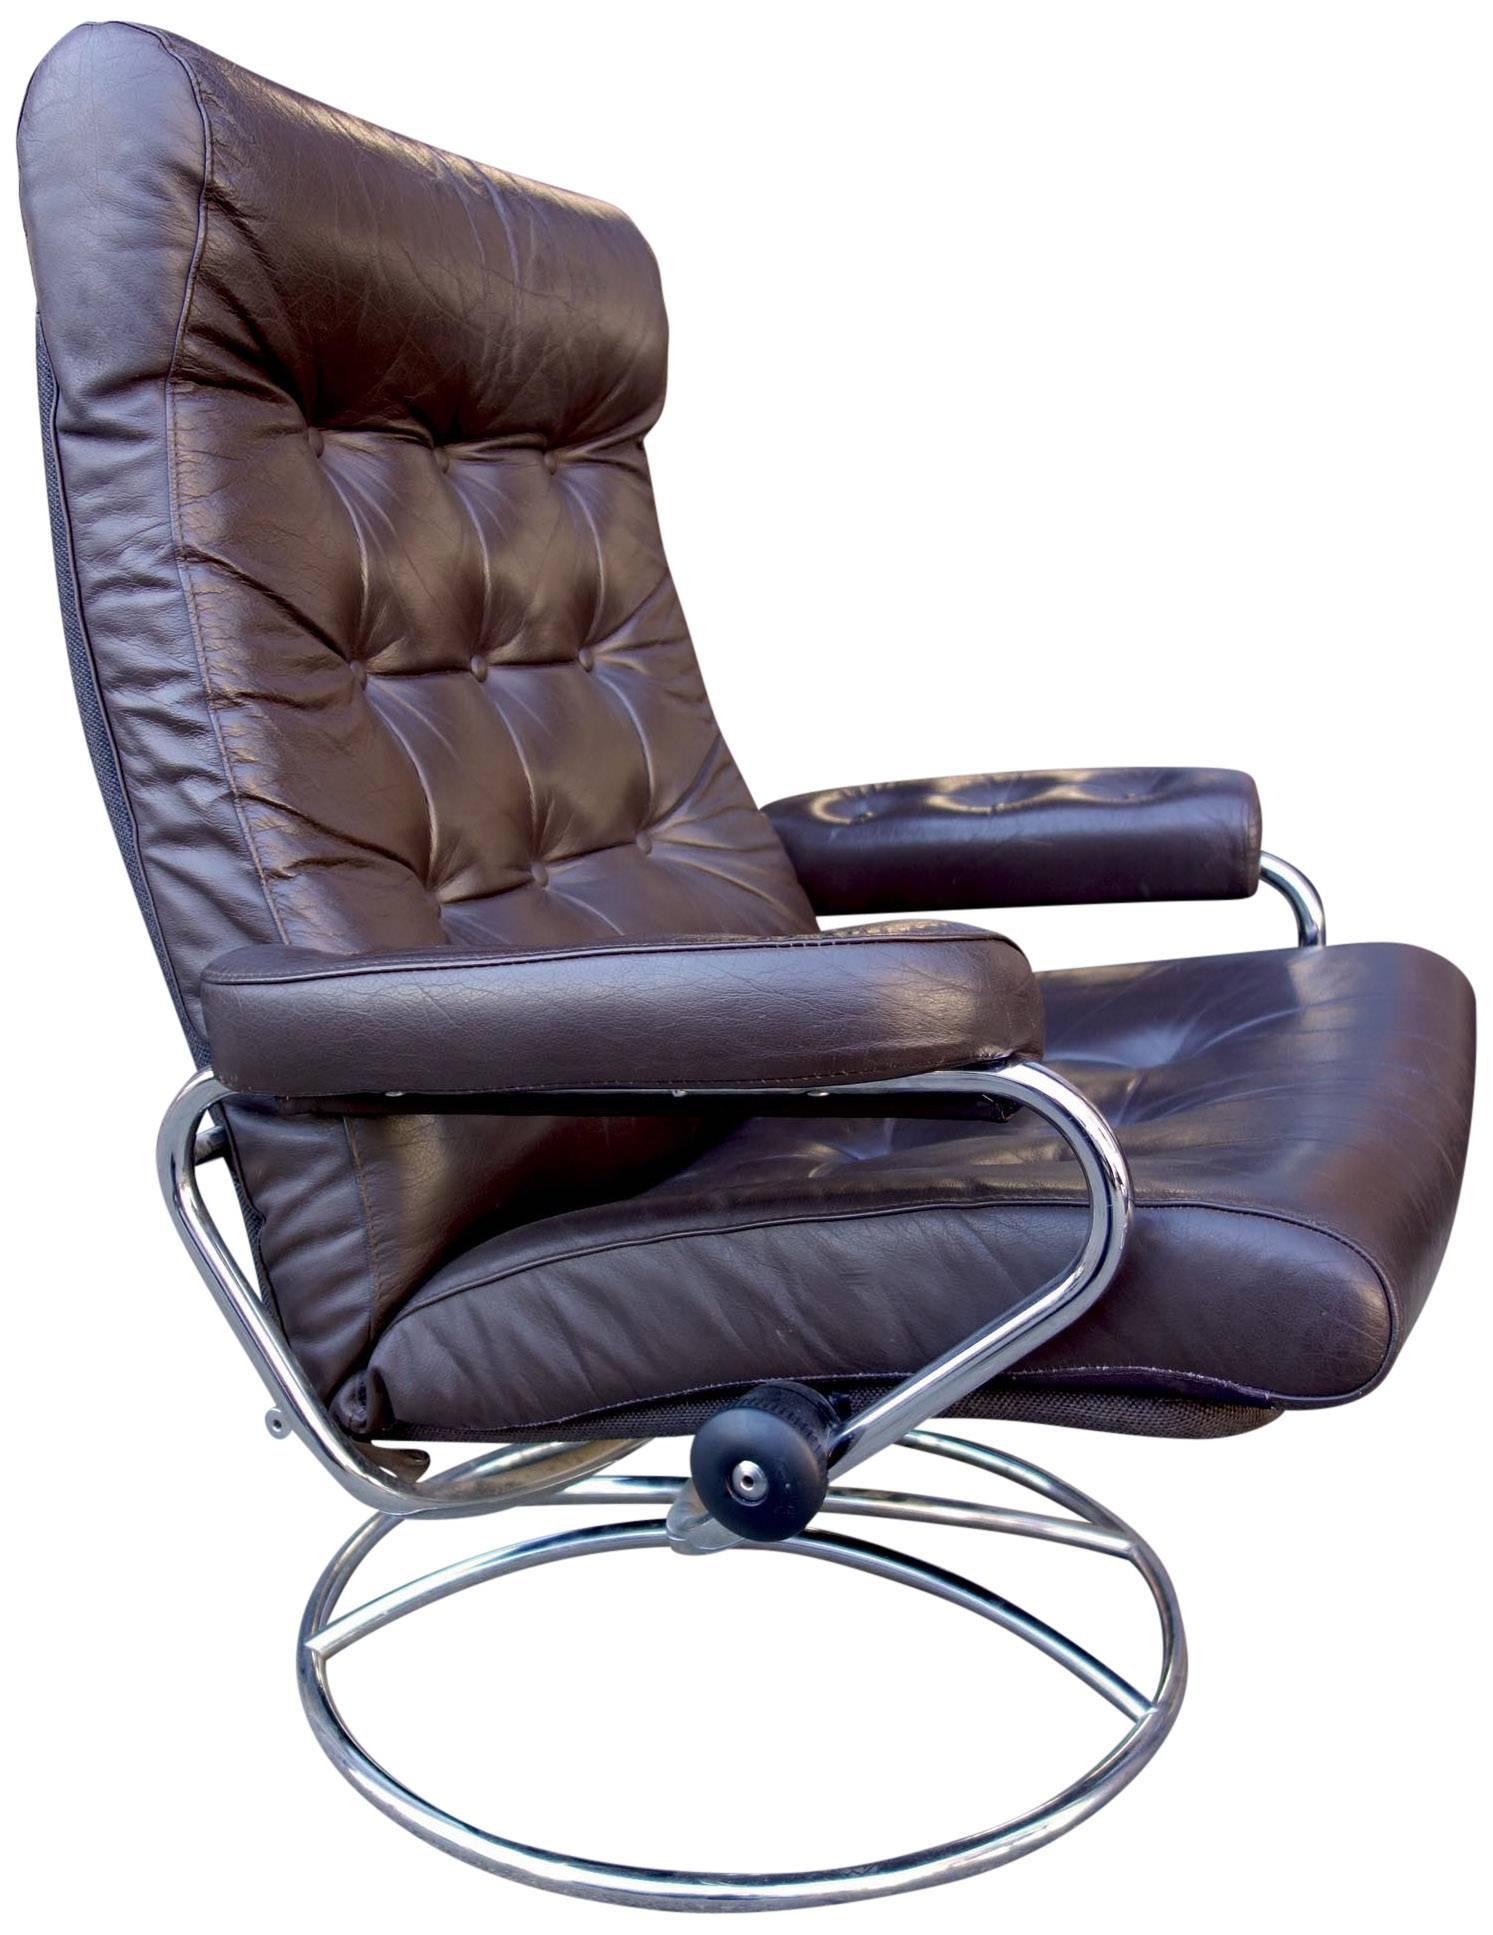 Incredibly comfortable as the name implies. Very nice vintage Scandinavian lounge chair with ottoman.